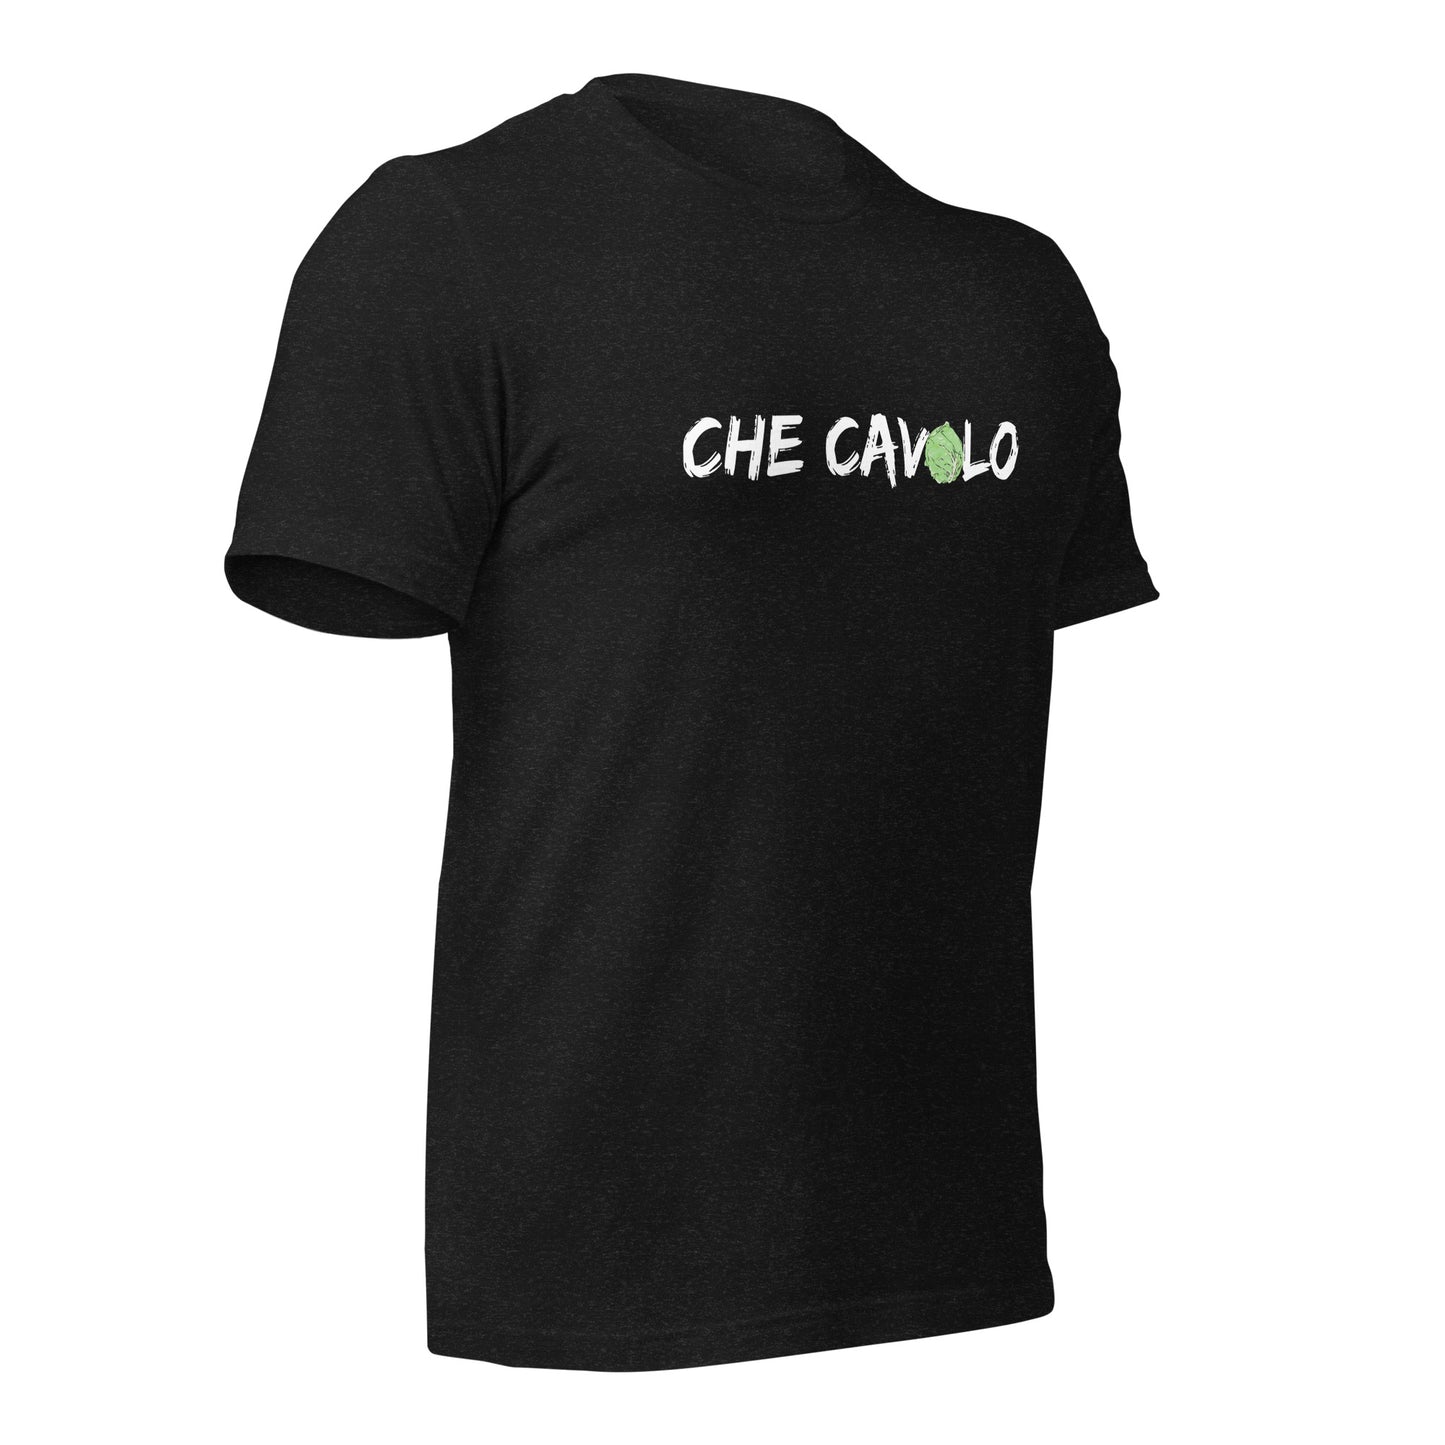 Che Cavolo - Unisex t-shirt